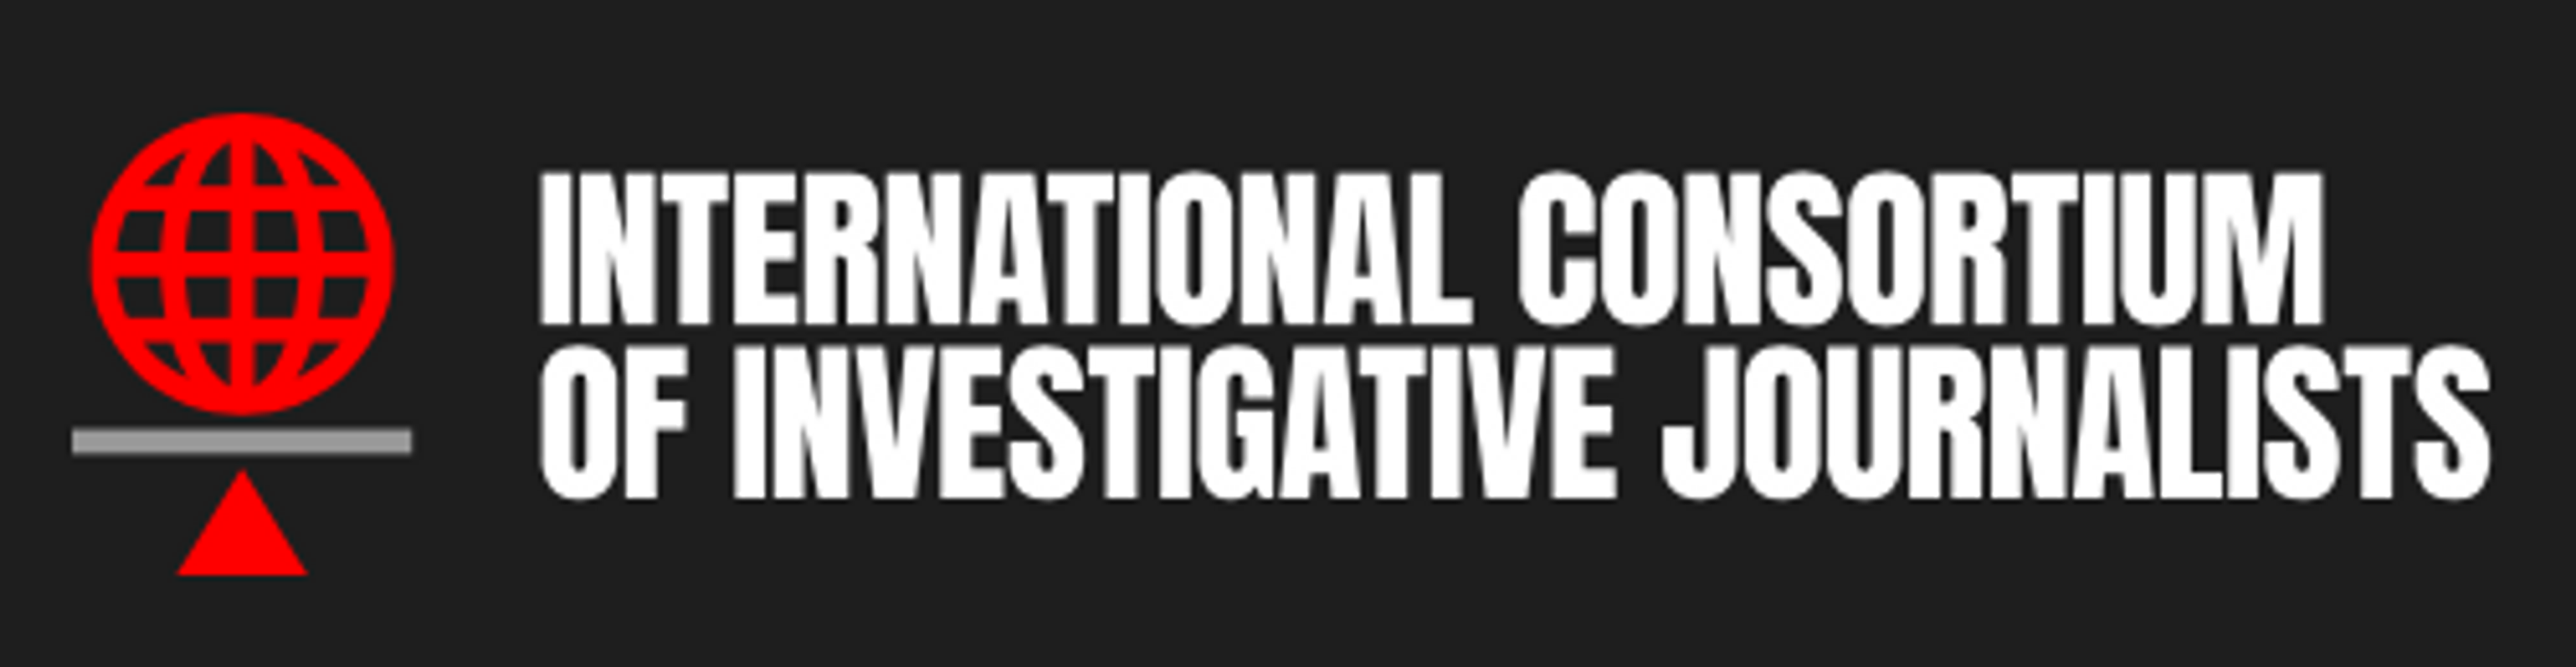 The International Consortium of Investigative Journalists